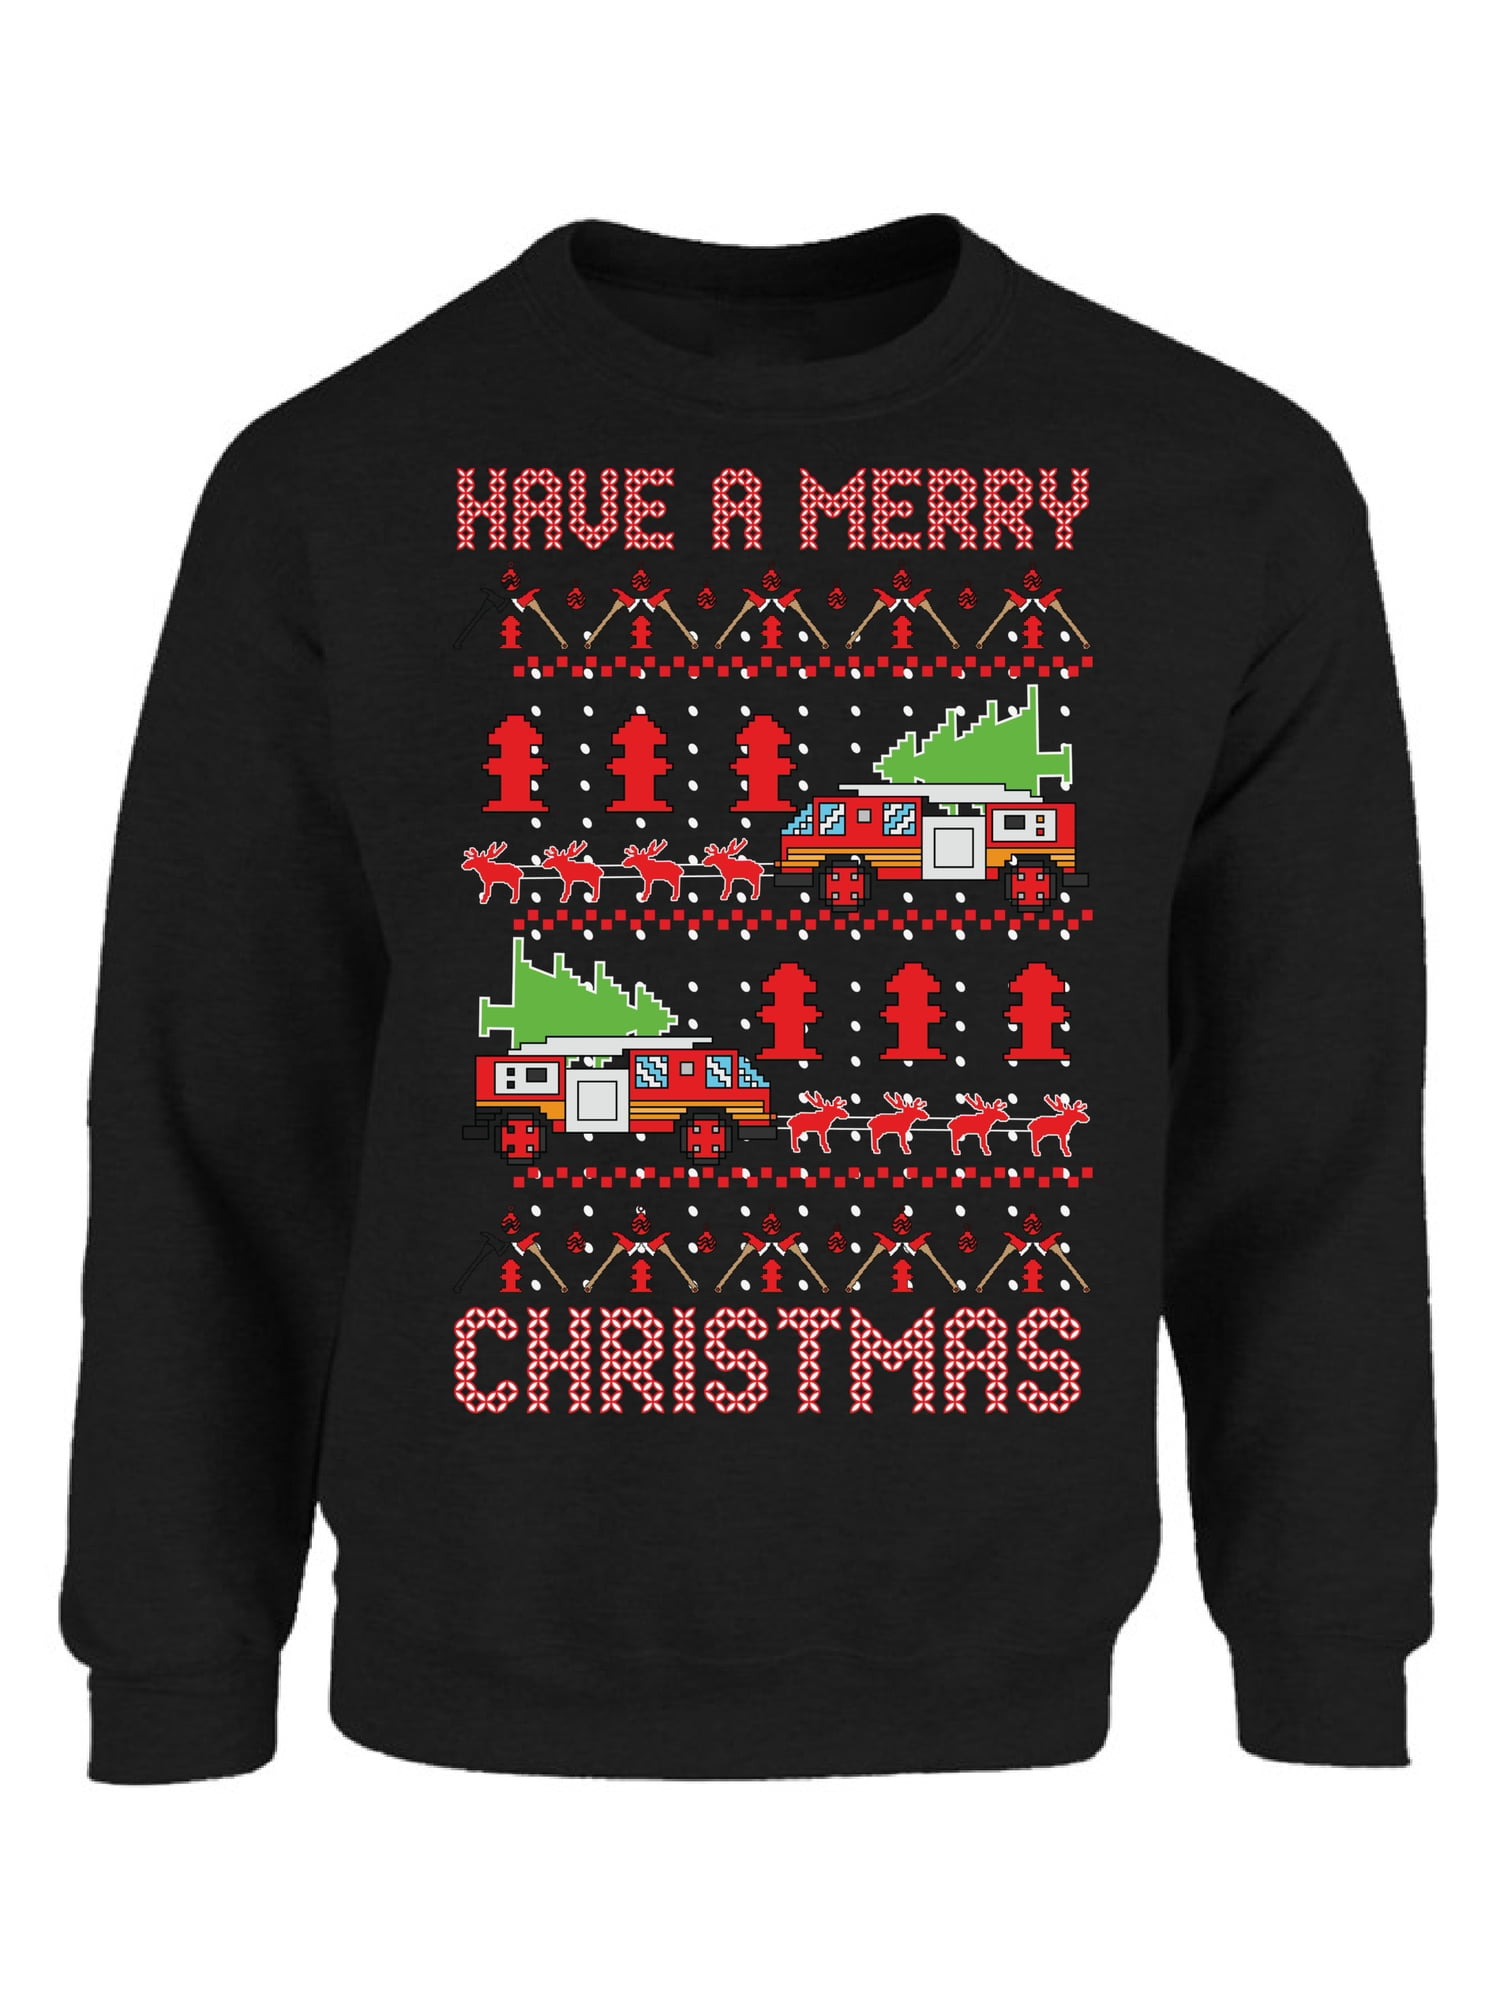 Firetrucks Firemen Ugly Christmas Sweater Toddler/Kids Sweatshirt Xmas Present 